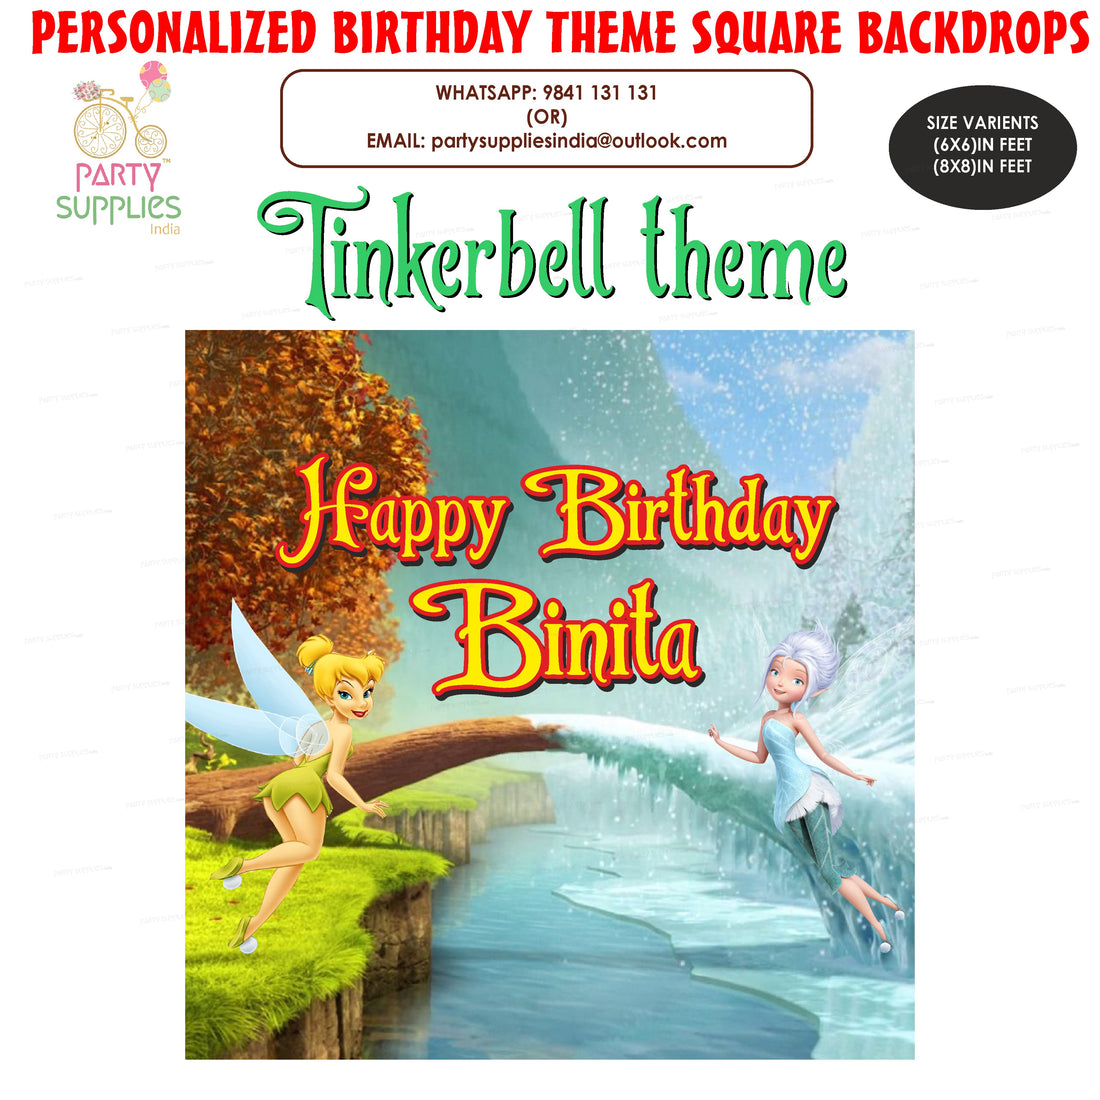 PSI Tinker Bell Theme Customized Square Backdrop